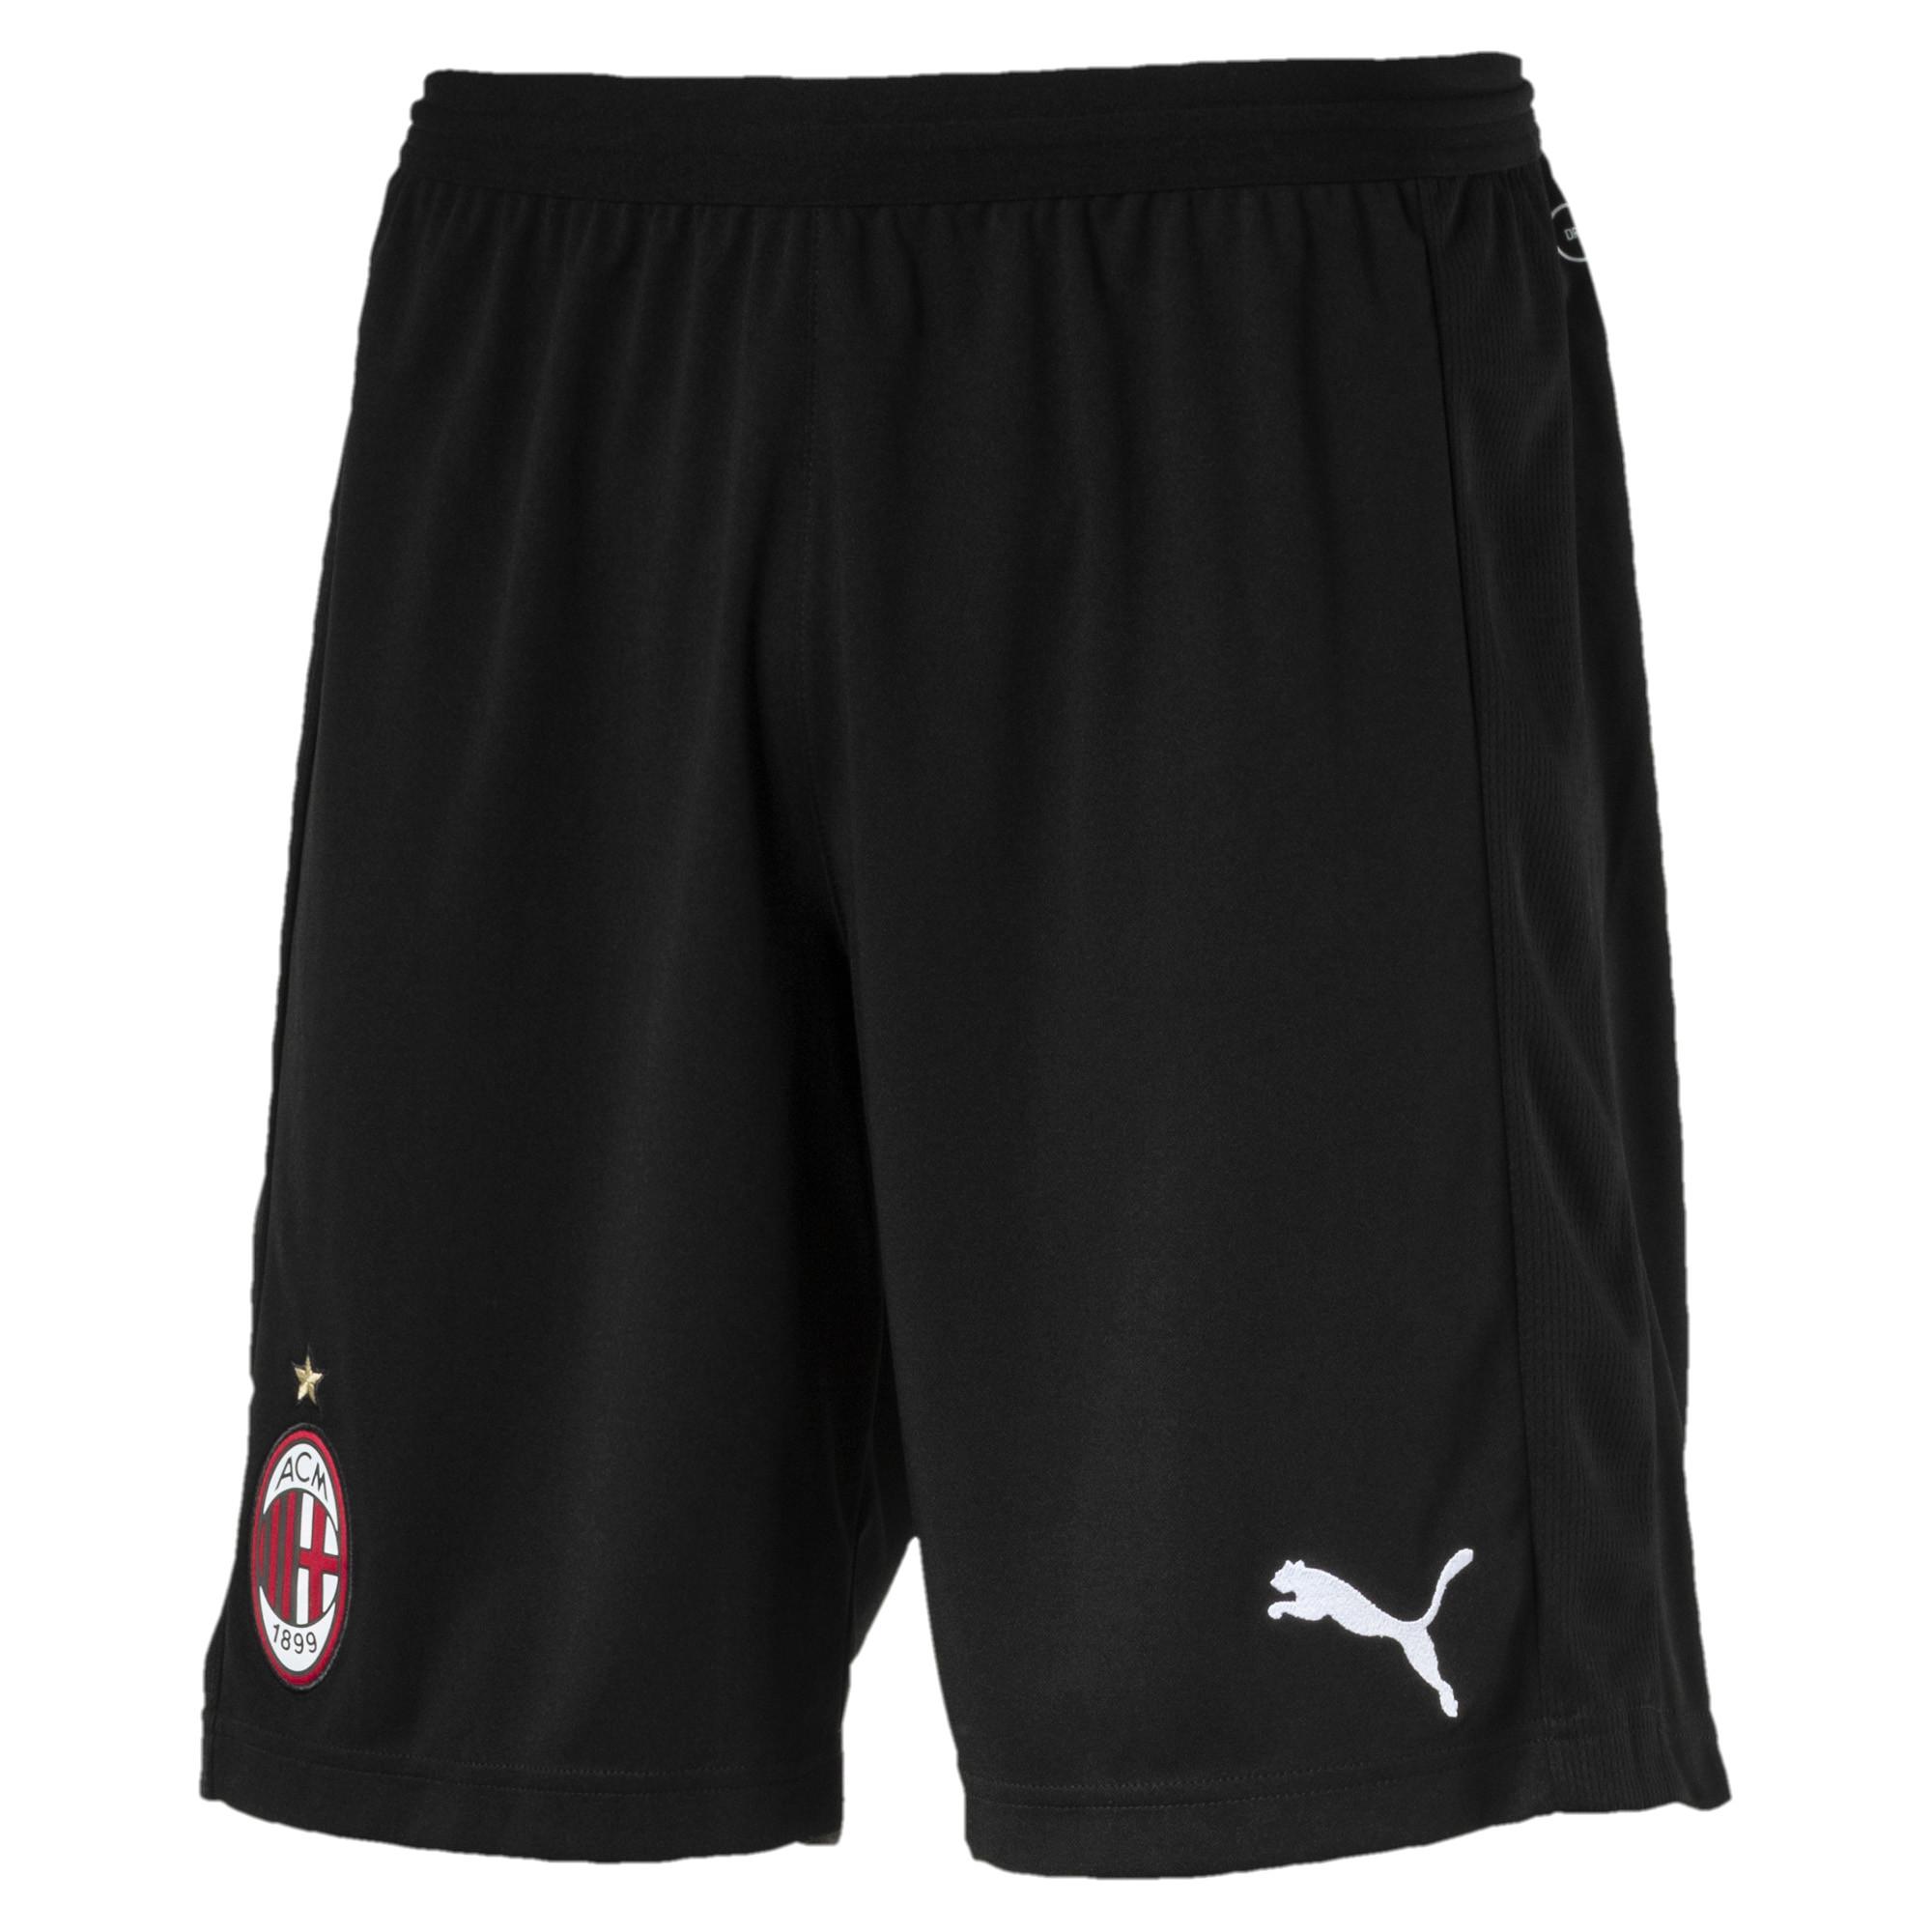 PUMA Ac Milan Men's Replica Shorts in Black for Men - Save 49% - Lyst